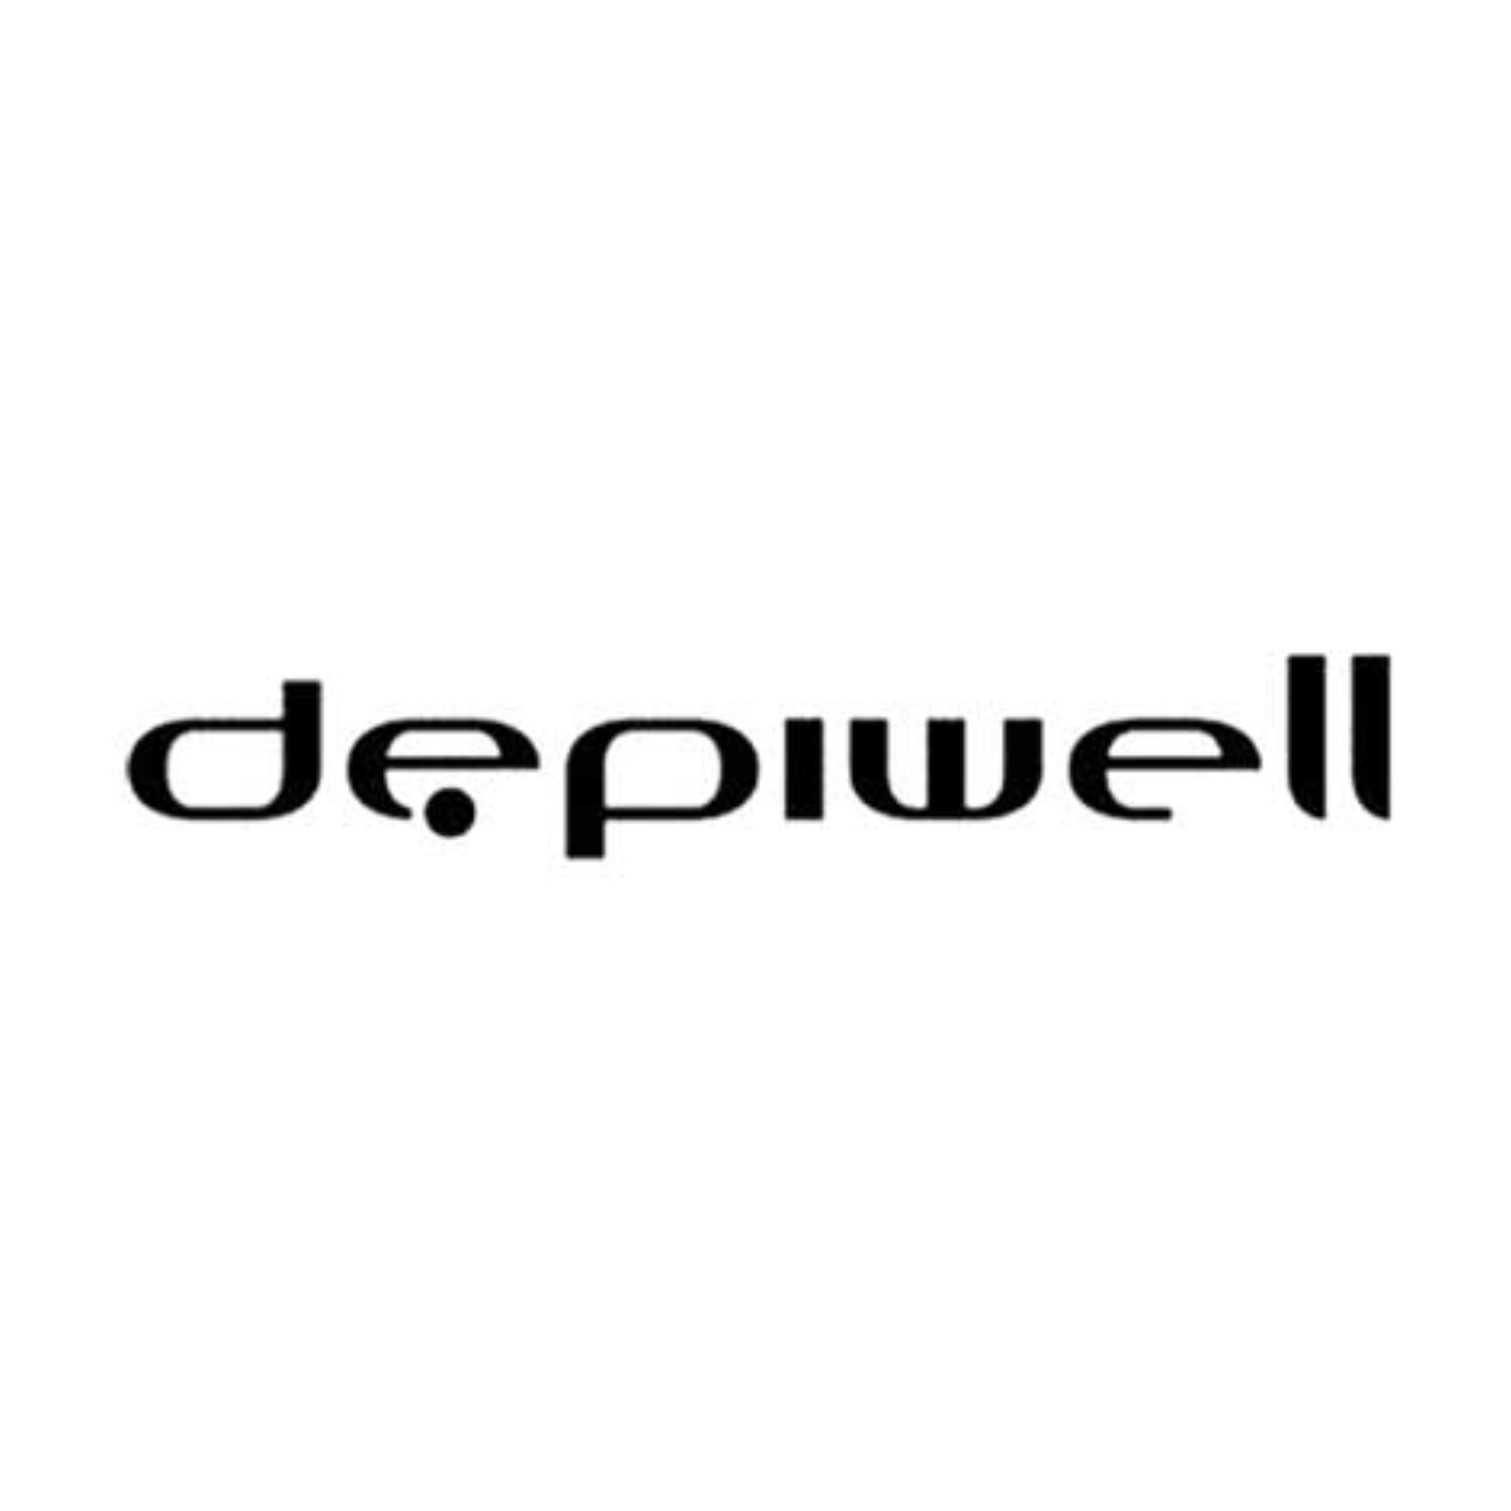 Depiwell